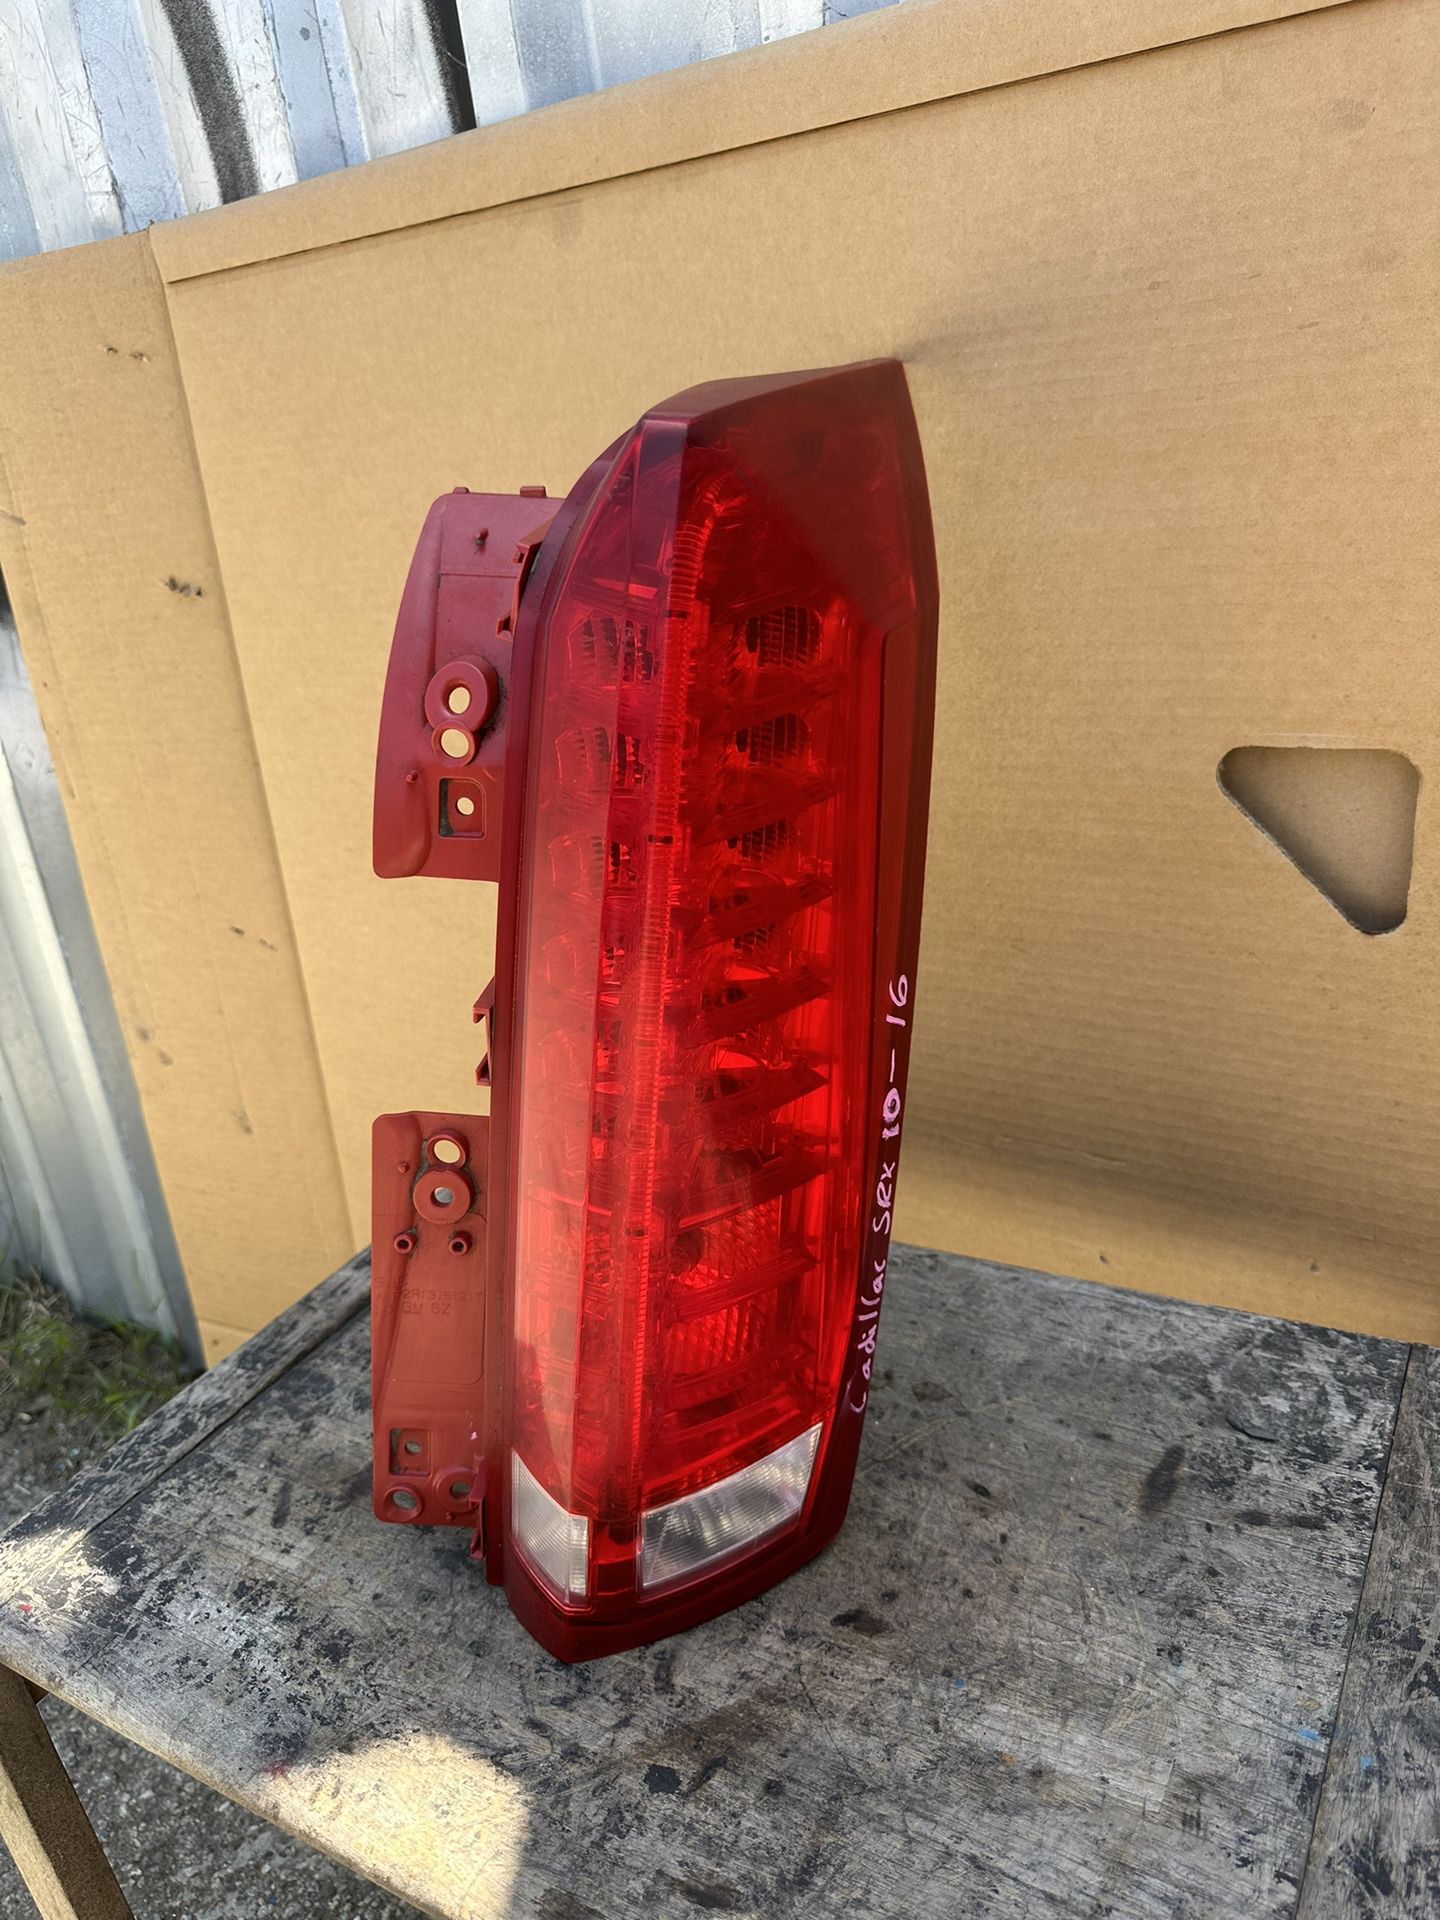 2010 2011 2012 2013 2014 2015 2016 Cadillac Srx Rear Tail Light Lamp Rh Right Passenger Side Original Used Oem 